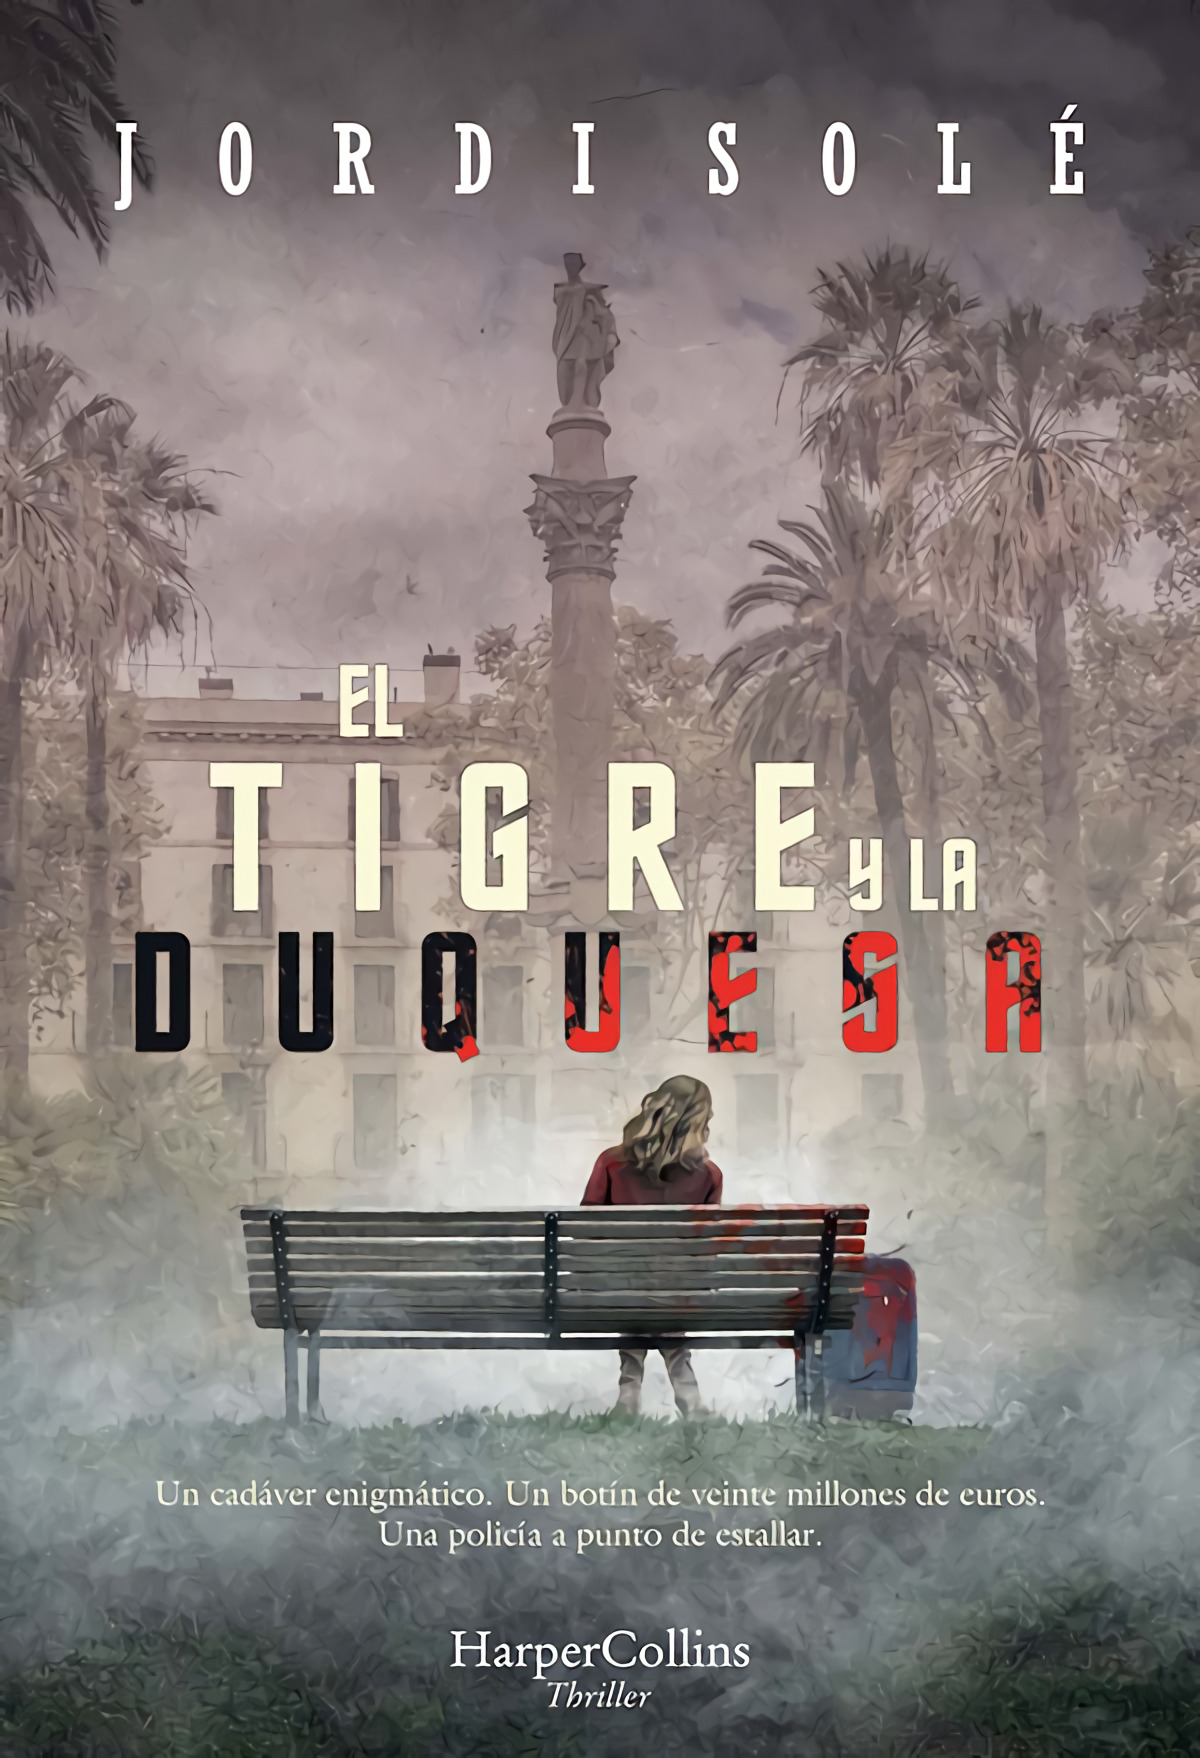 El tigre y la duquesa - Solé, Jordi